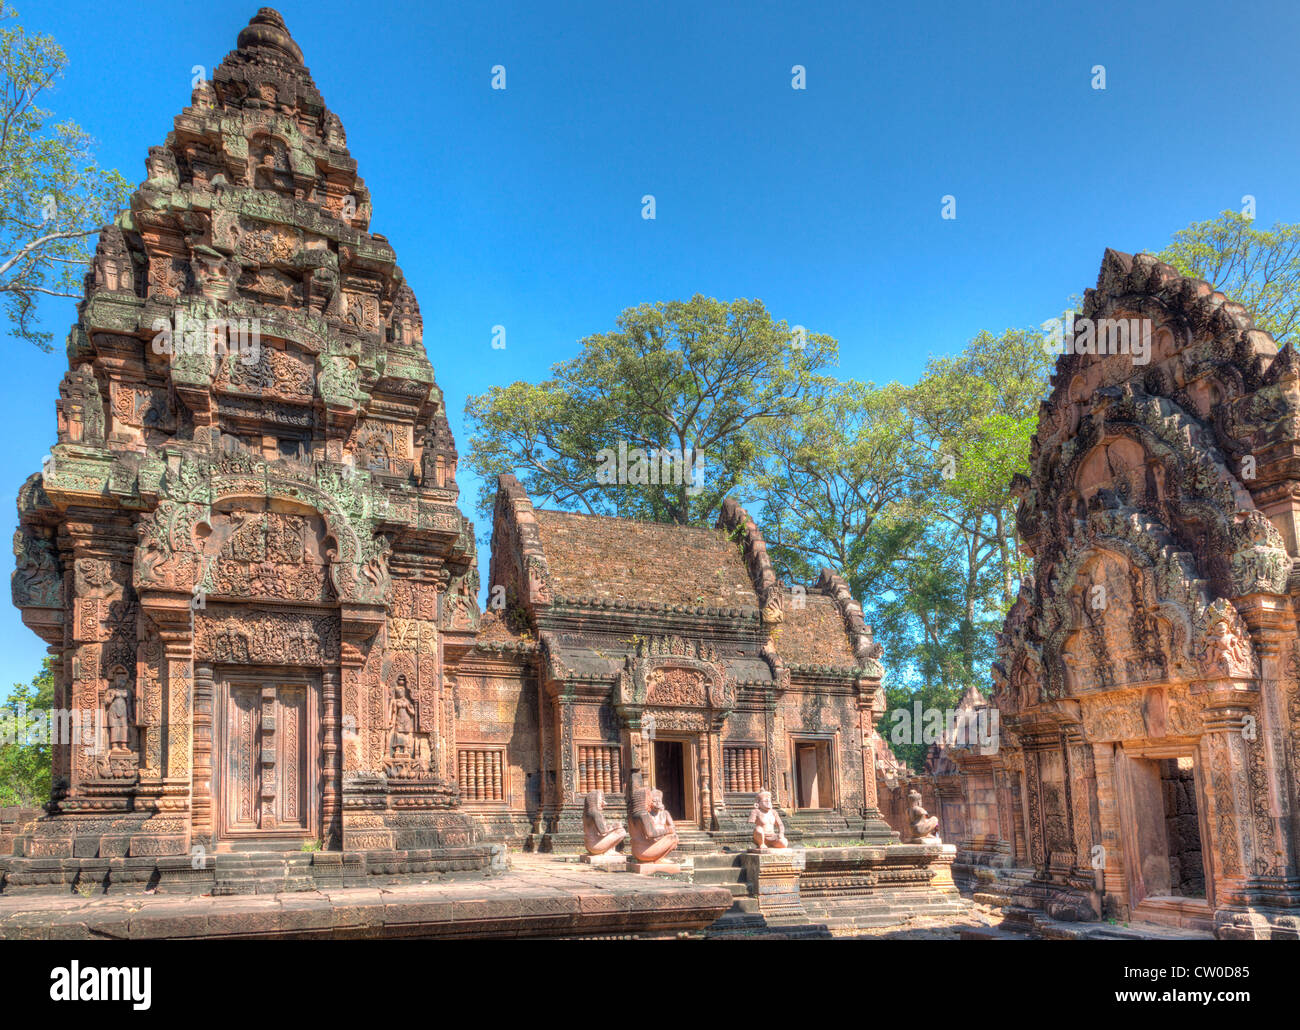 Banteay Srey temple in Cambodia Stock Photo